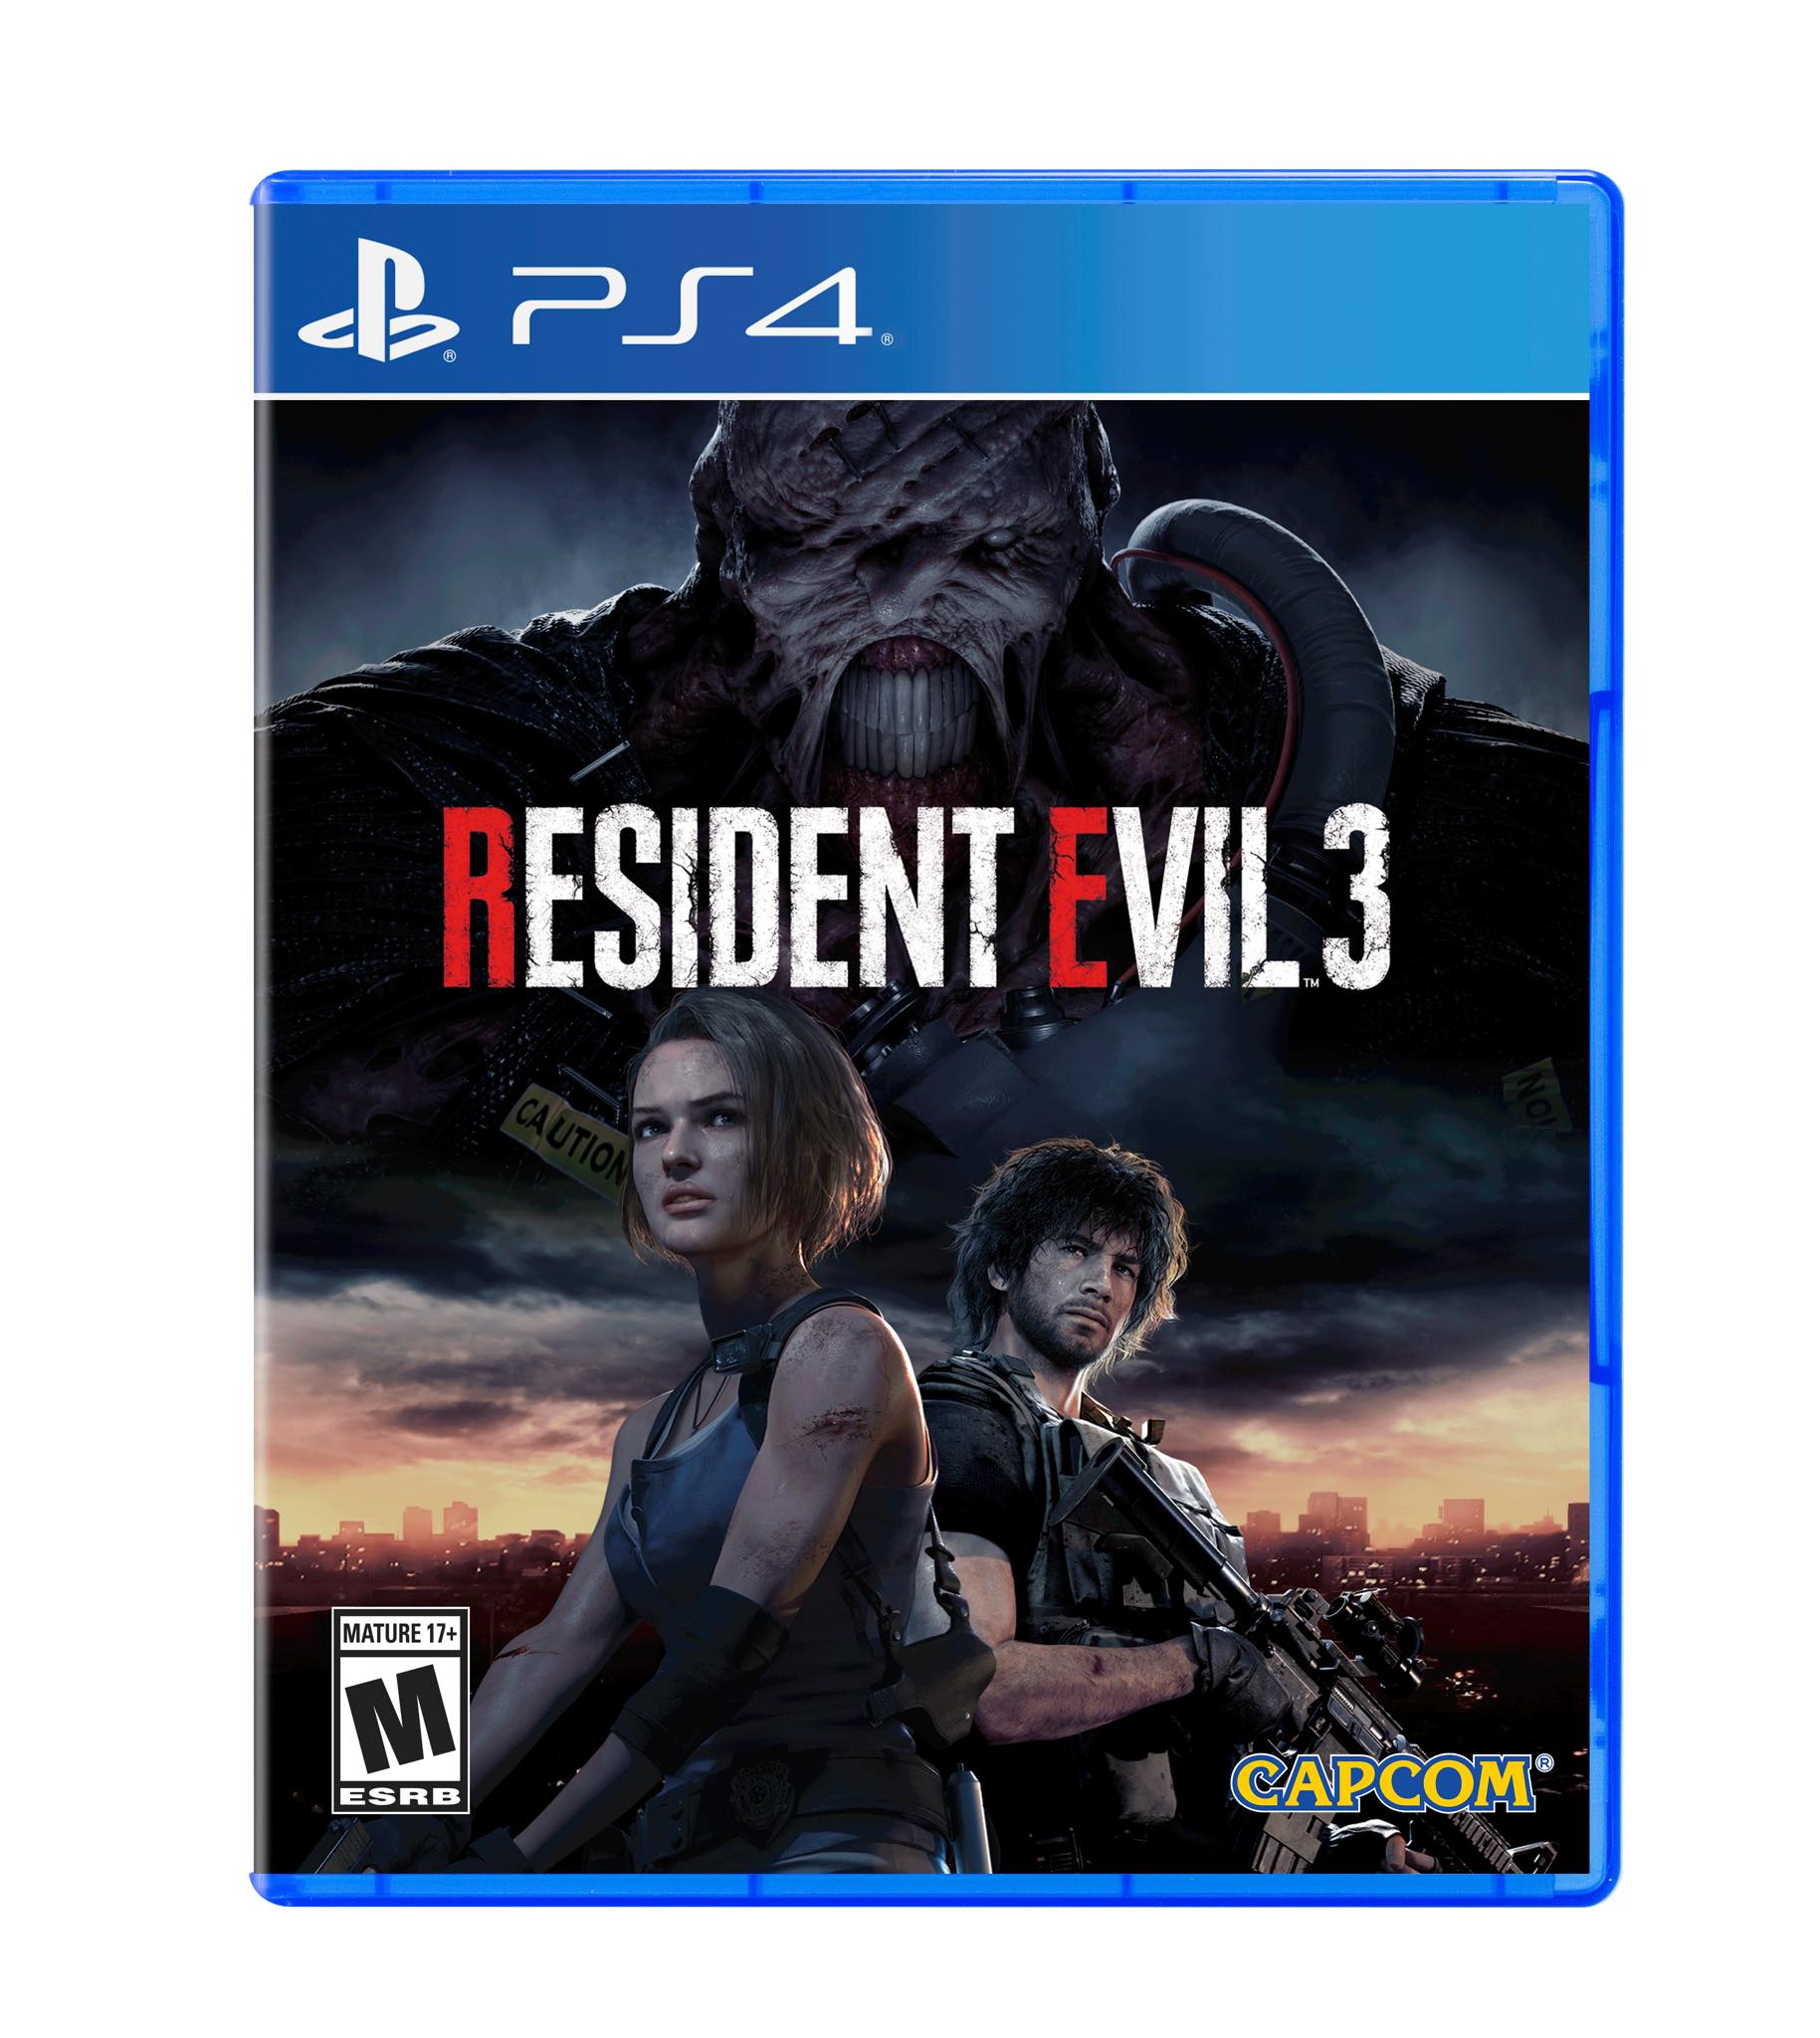 [HCM]Game Resident Evil 3 Remake Cho Máy Game Playstation 4